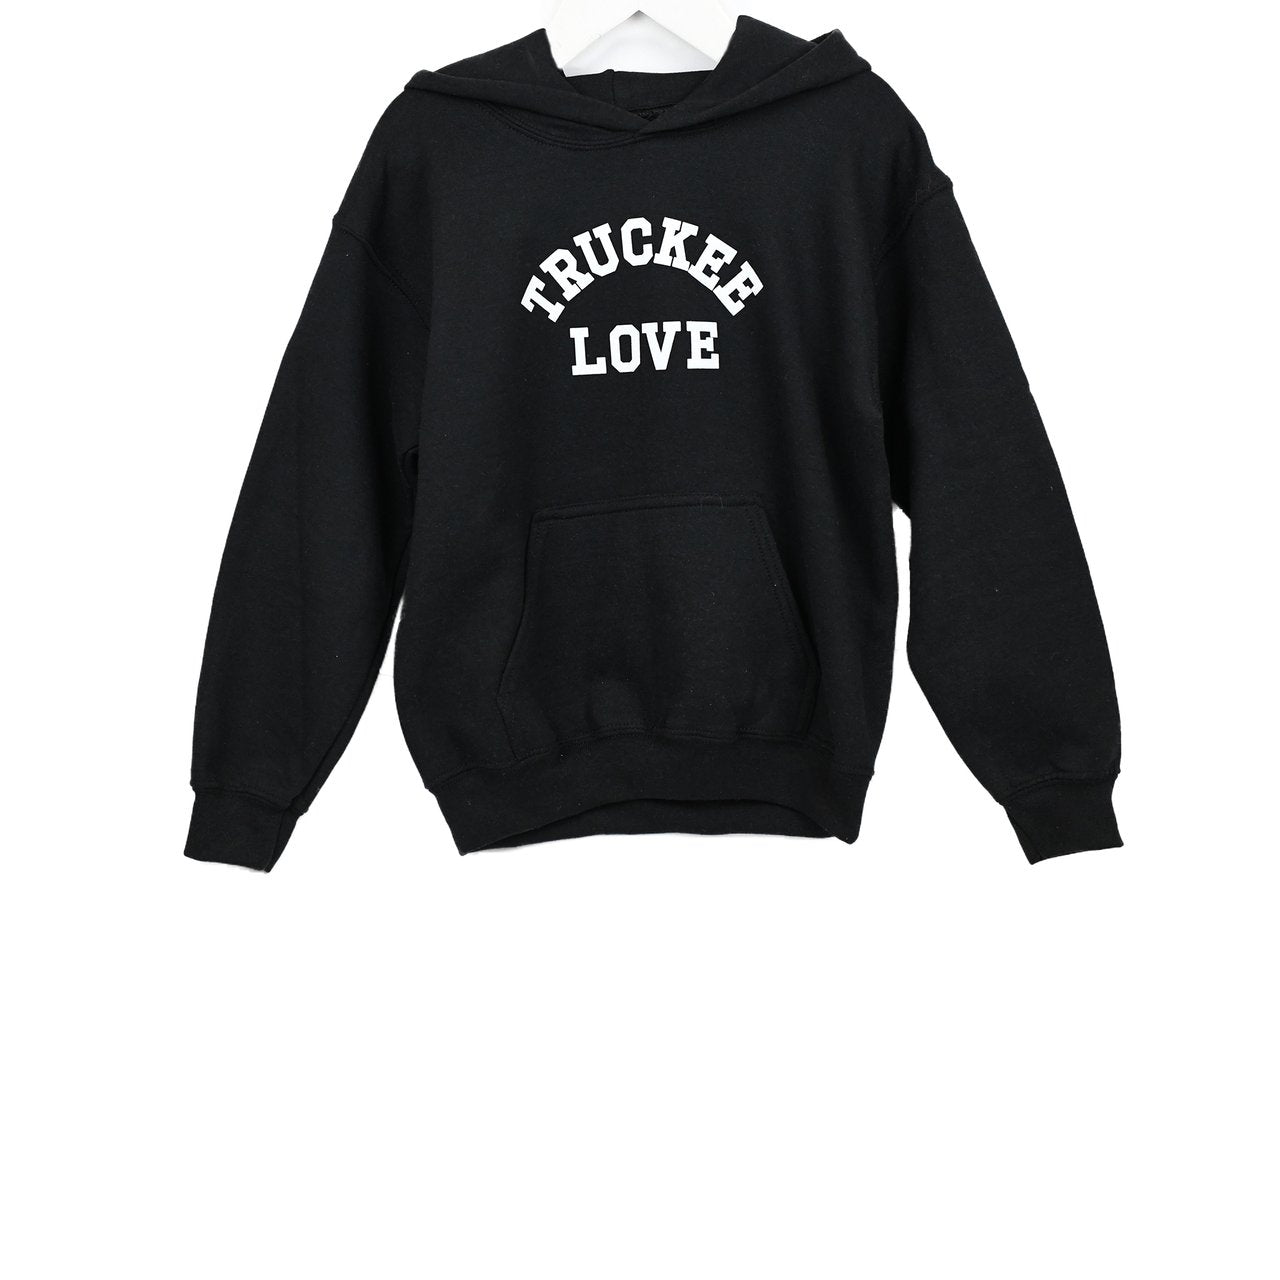 Truckee Love Hooded Sweatshirt - Black